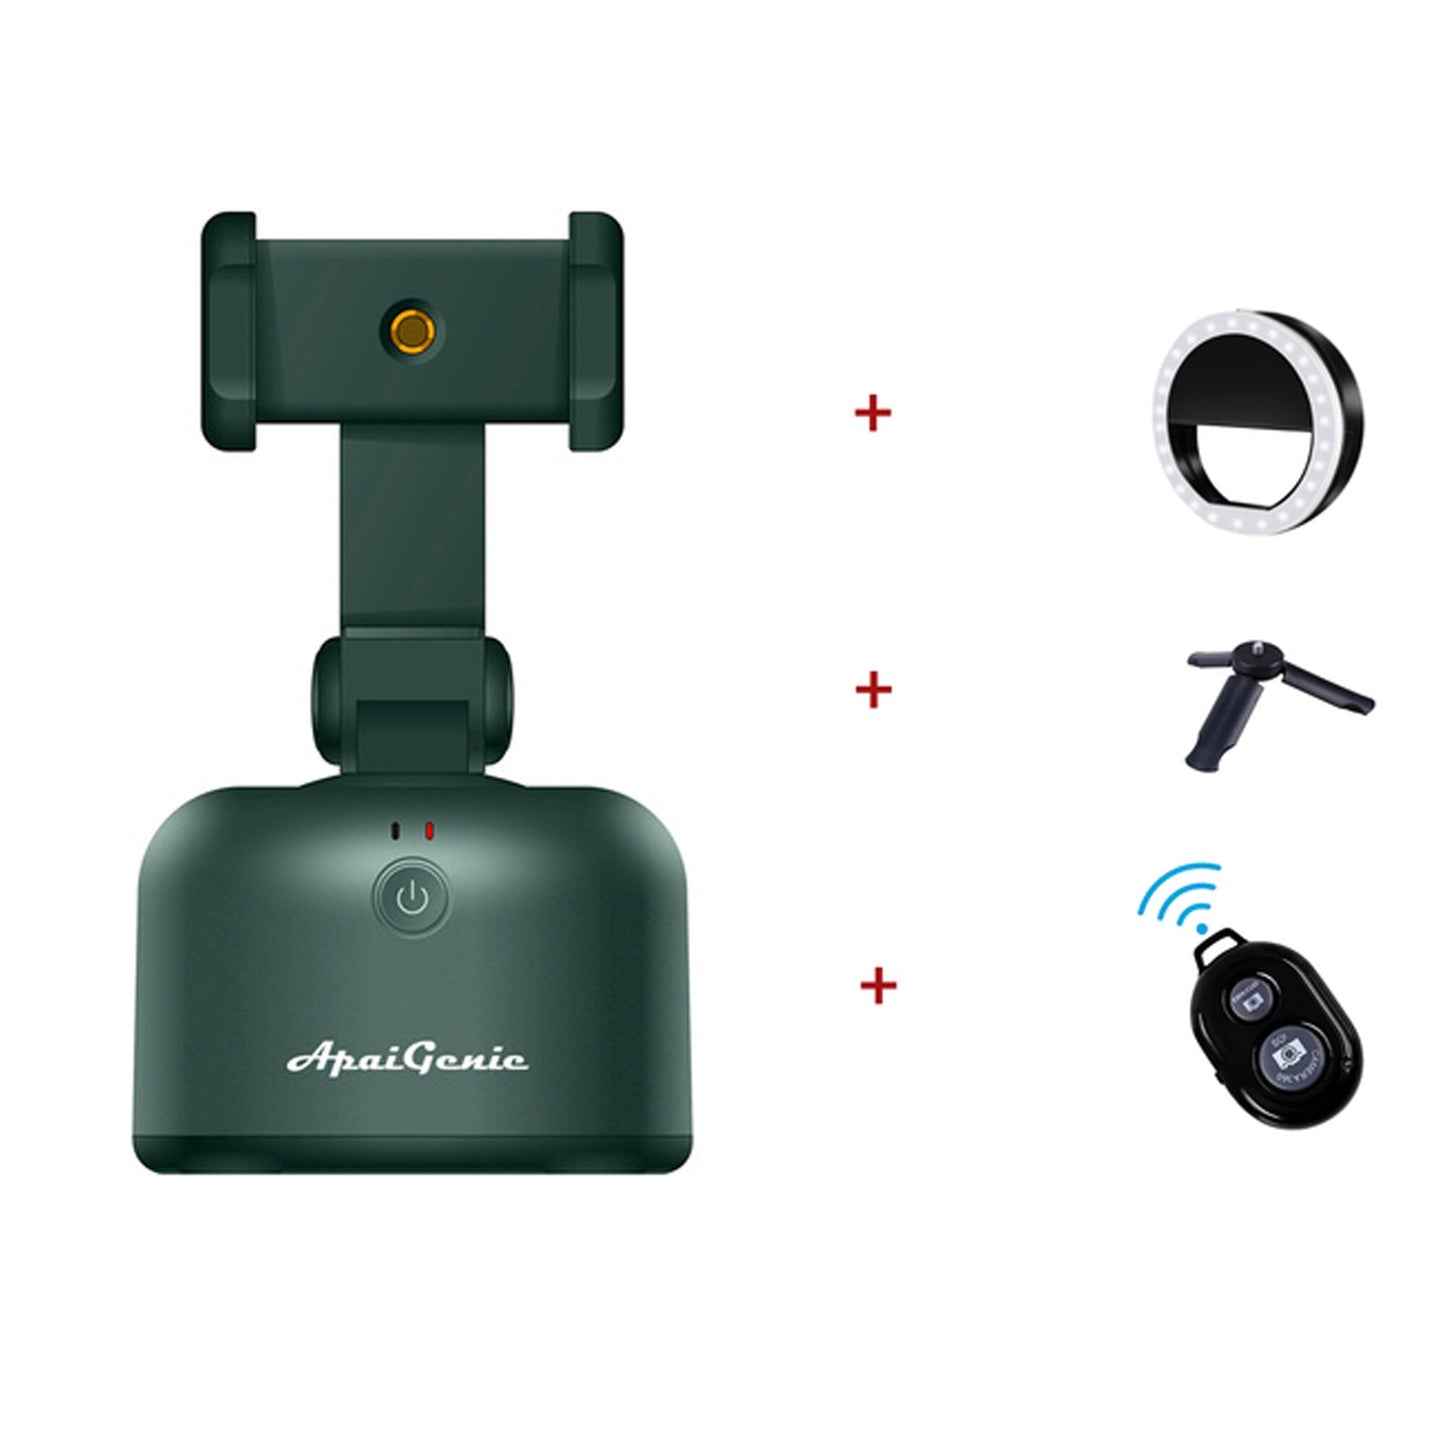 Smart Selfie Stick Auto Face Object Tracking Camera Tripod Holder